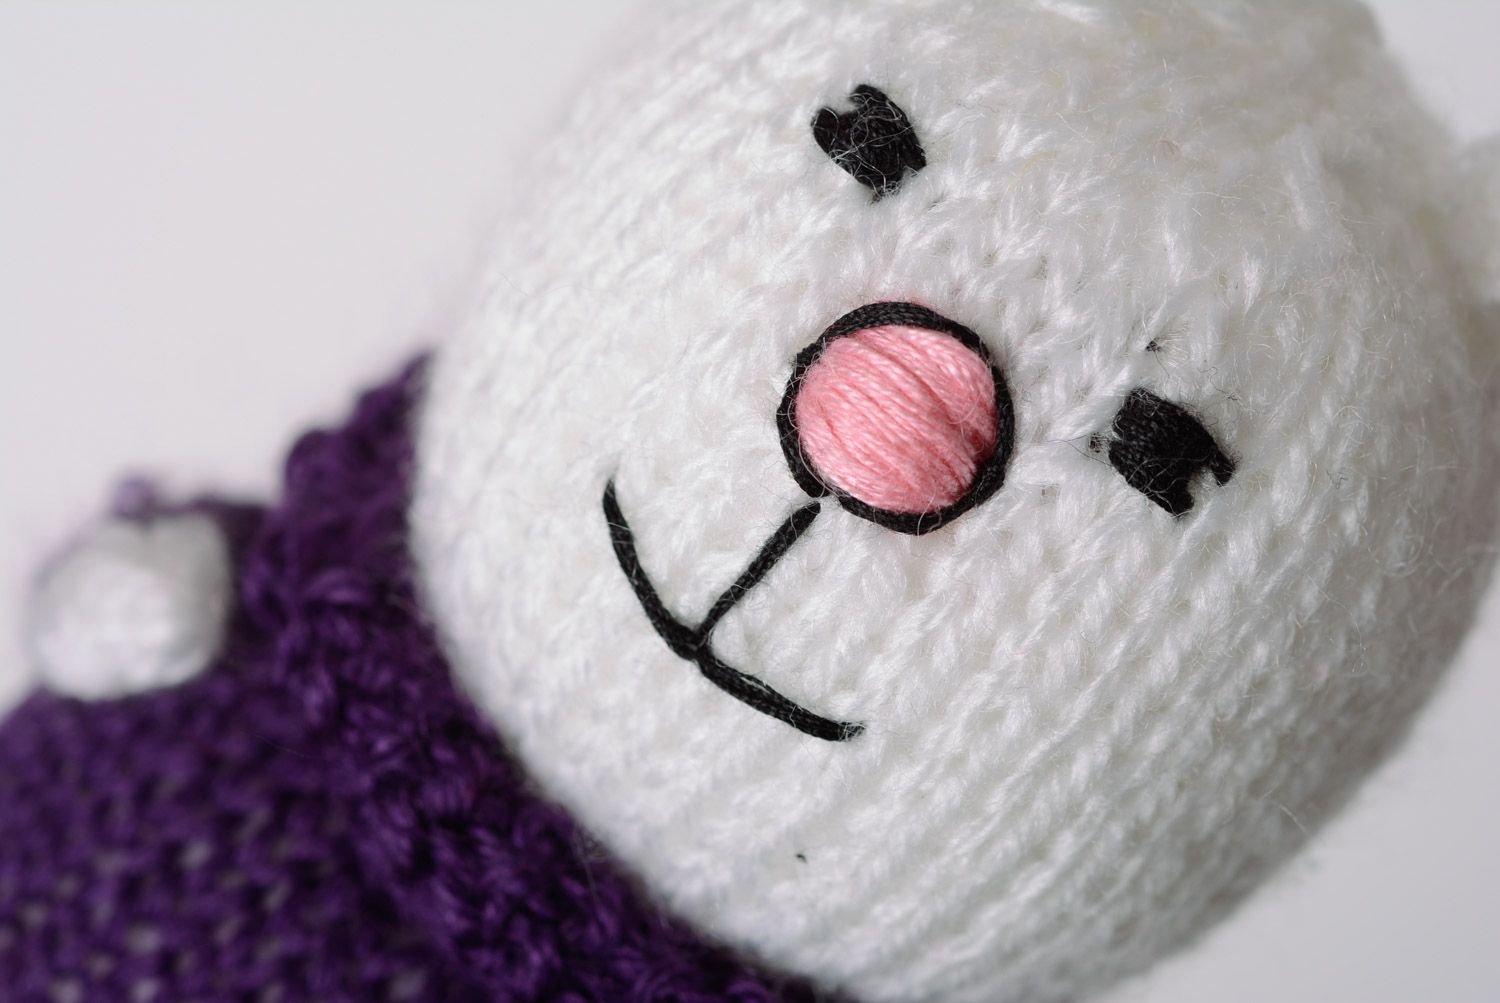 Juguete de peluche liebre blanca en suéter violeta artesanal sonriente foto 2